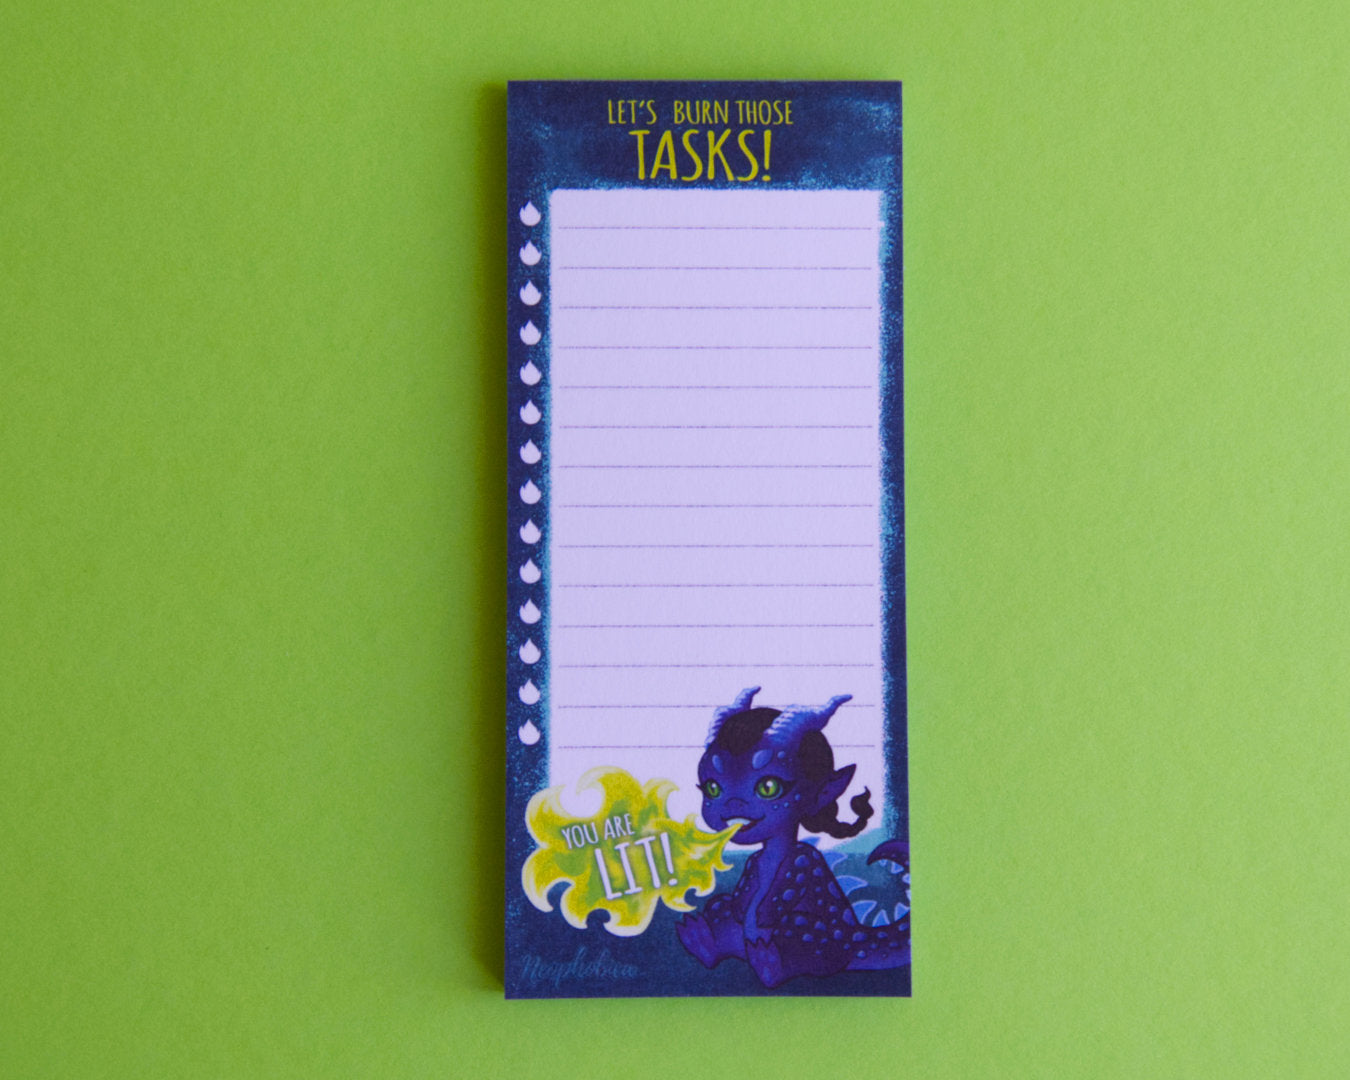 Tiny Dragon To Do List - Note Pad